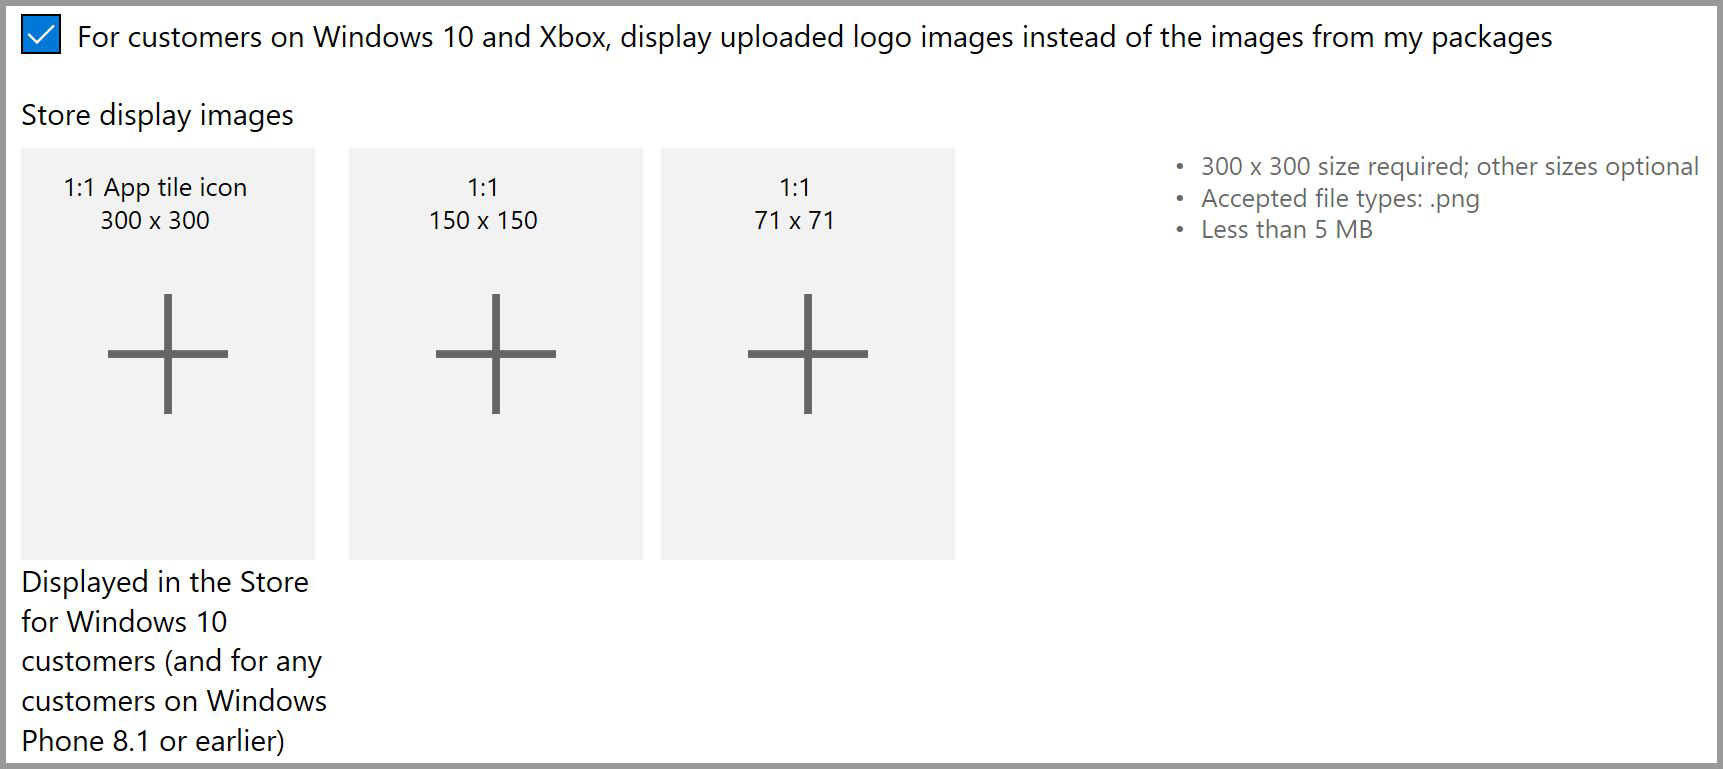 Black Xbox Icon Wallpapers